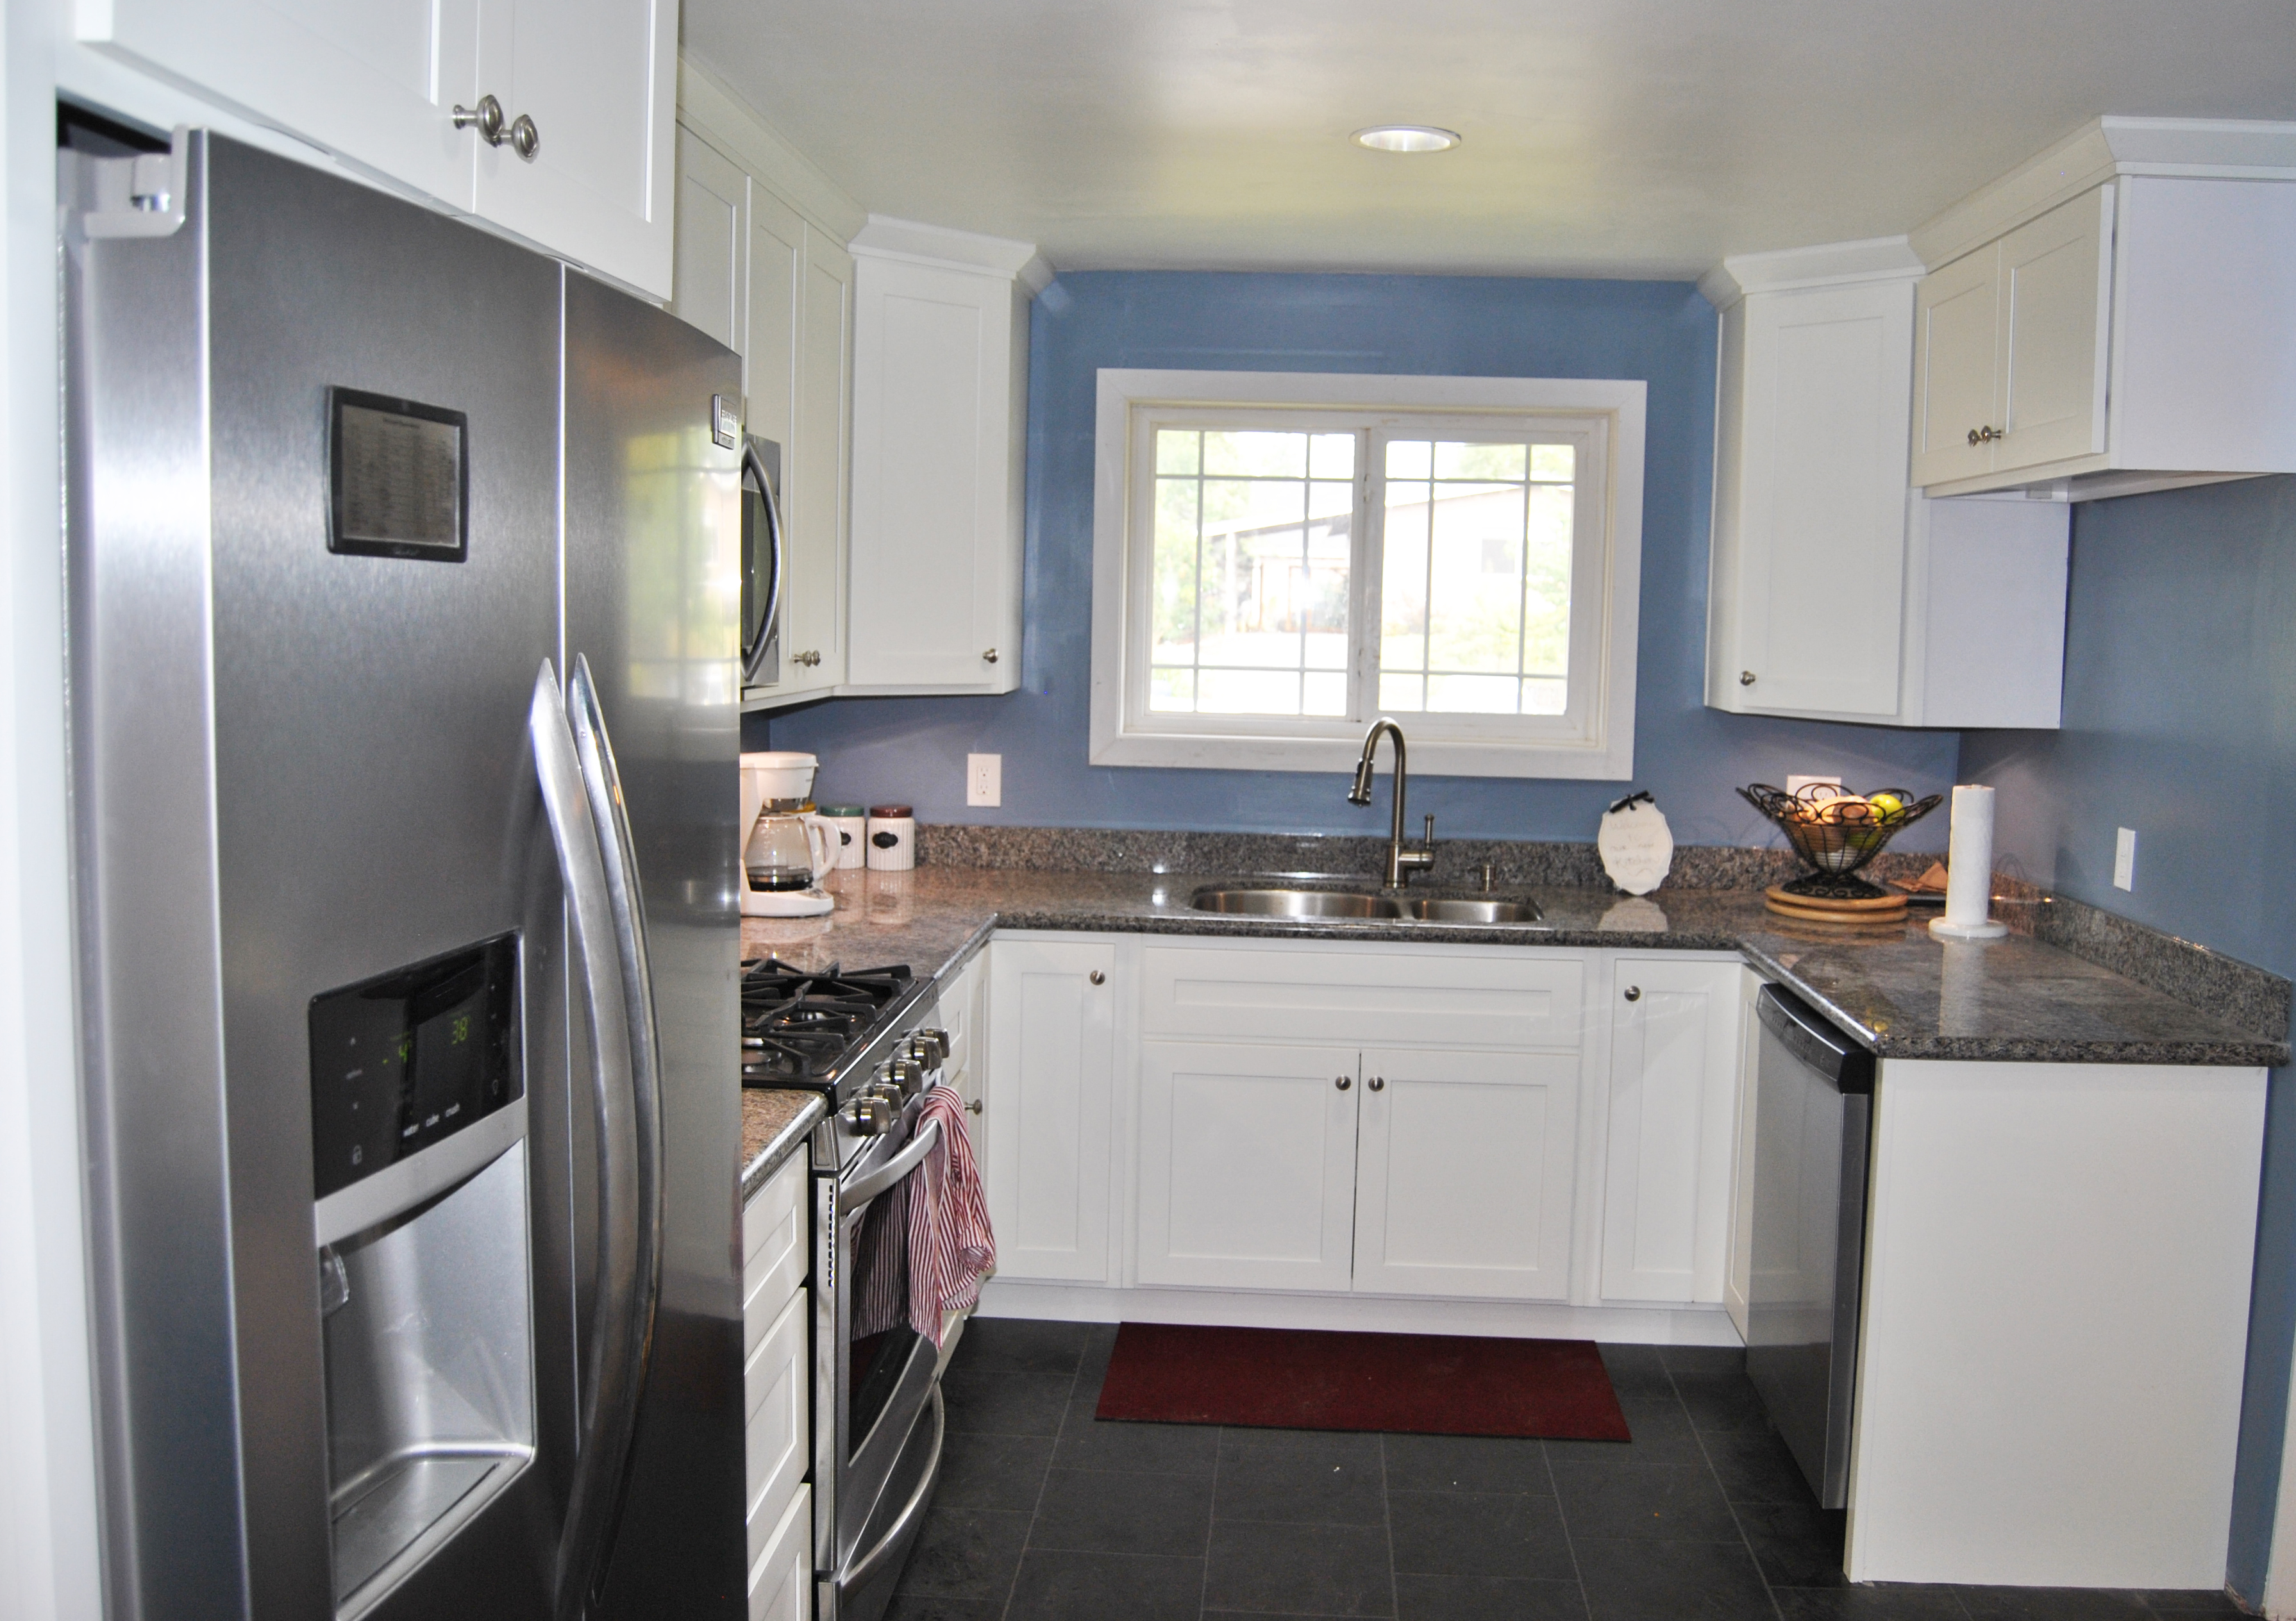 remodeled kitchen stainless steel fridge sink window. white cabinets, gray floor. home improvement. renovation. house reno. | bexbernard.com